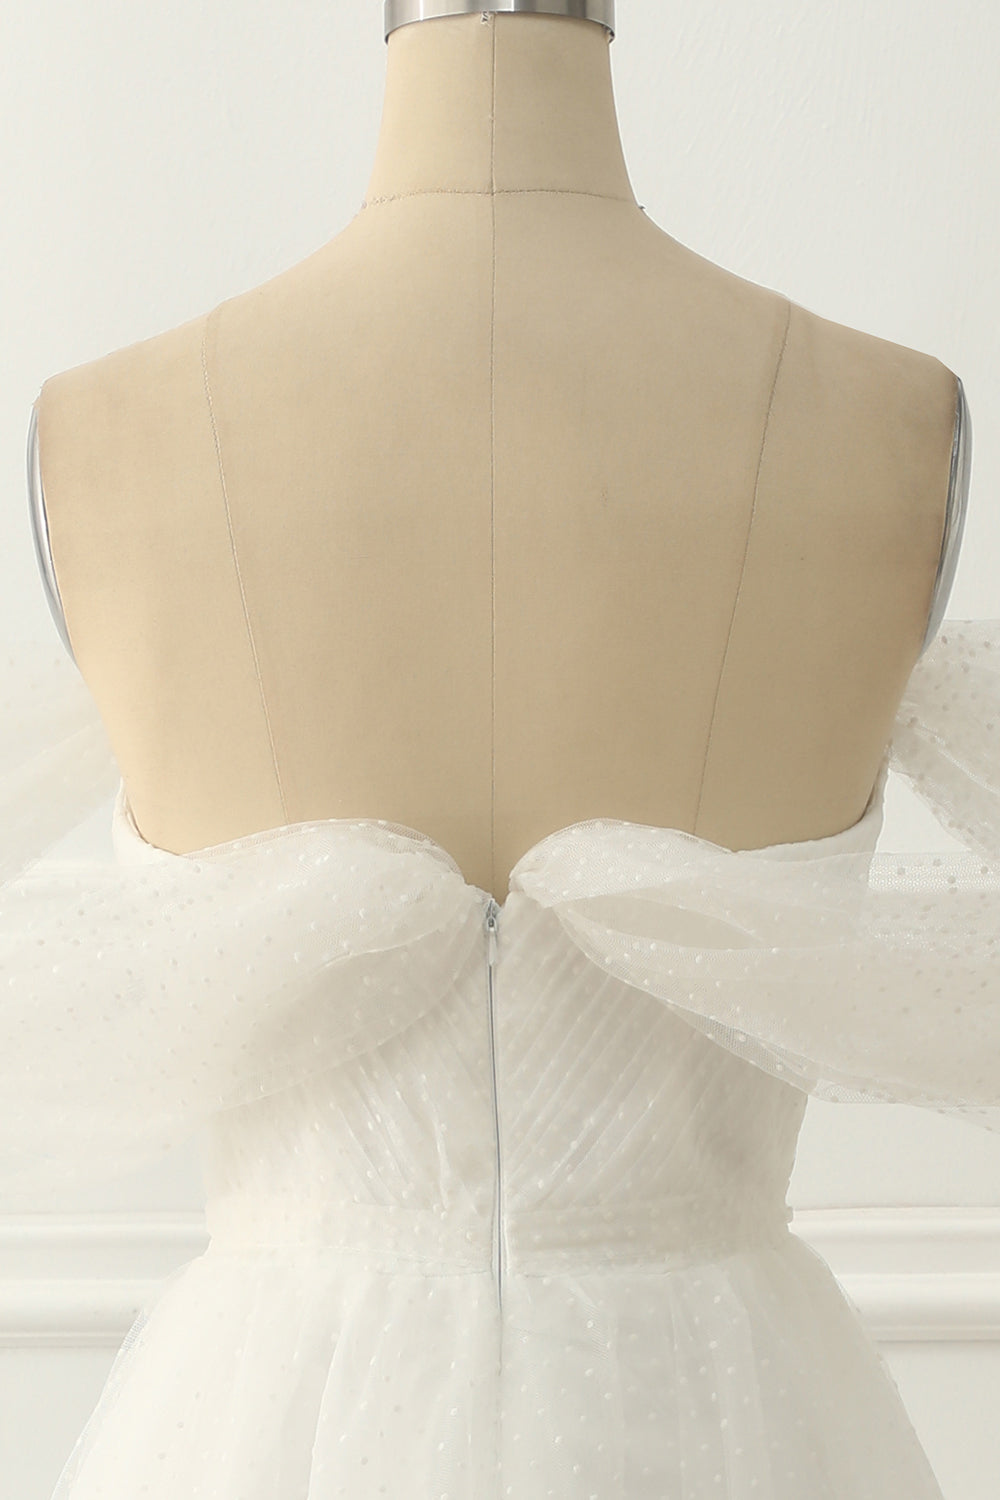 Beauty Dress Design, Ivory Tulle Off the Shoulder A-line Prom Dress